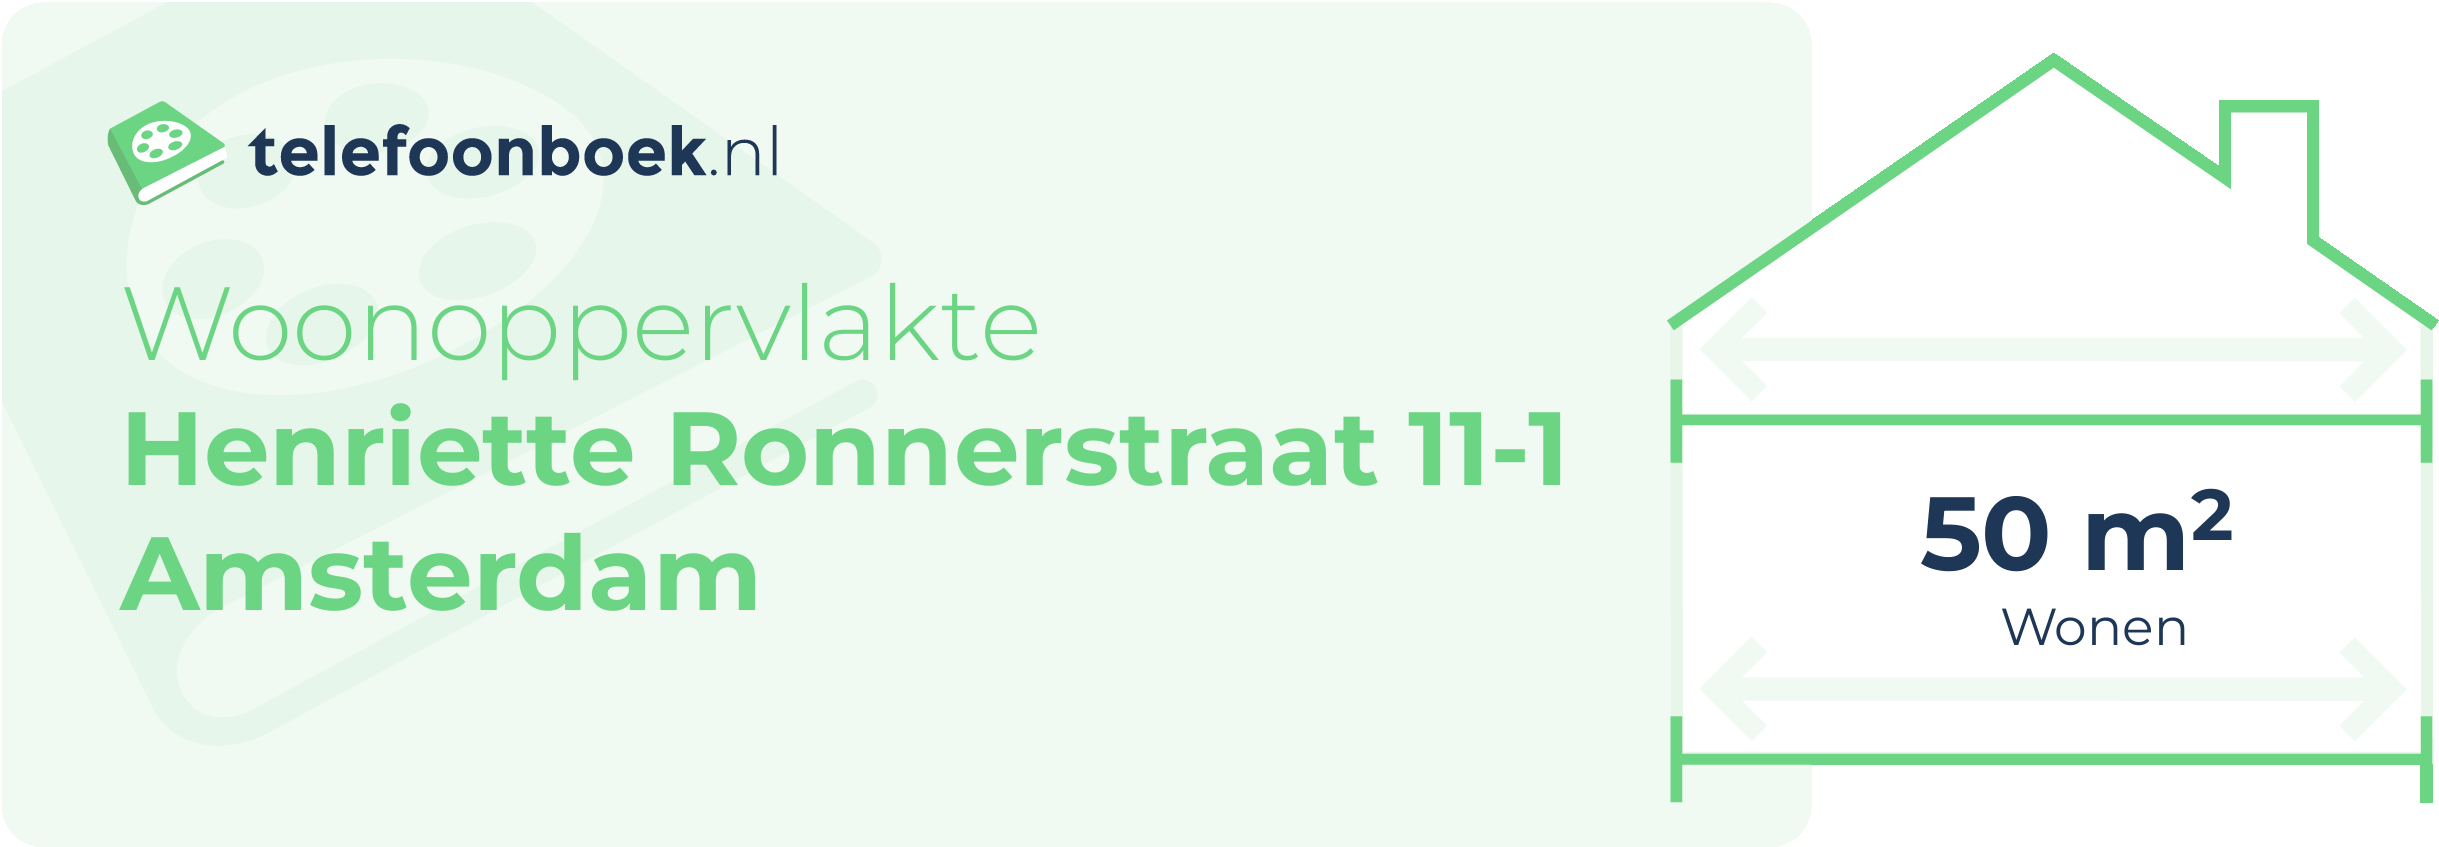 Woonoppervlakte Henriette Ronnerstraat 11-1 Amsterdam